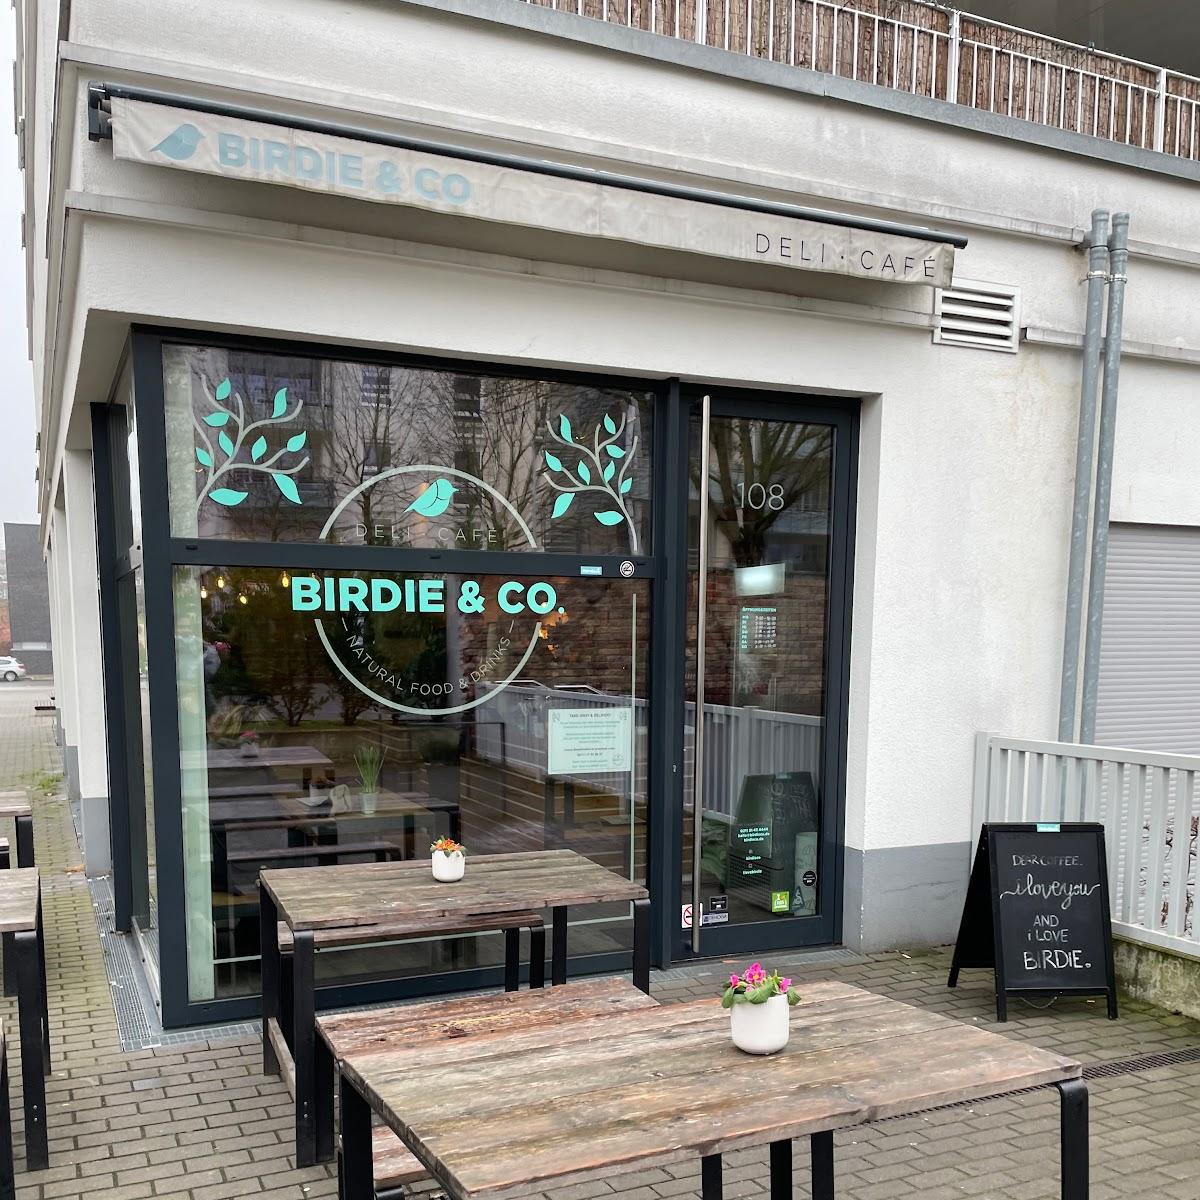 Restaurant "BIRDIE & CO. Deli · Café" in Düsseldorf